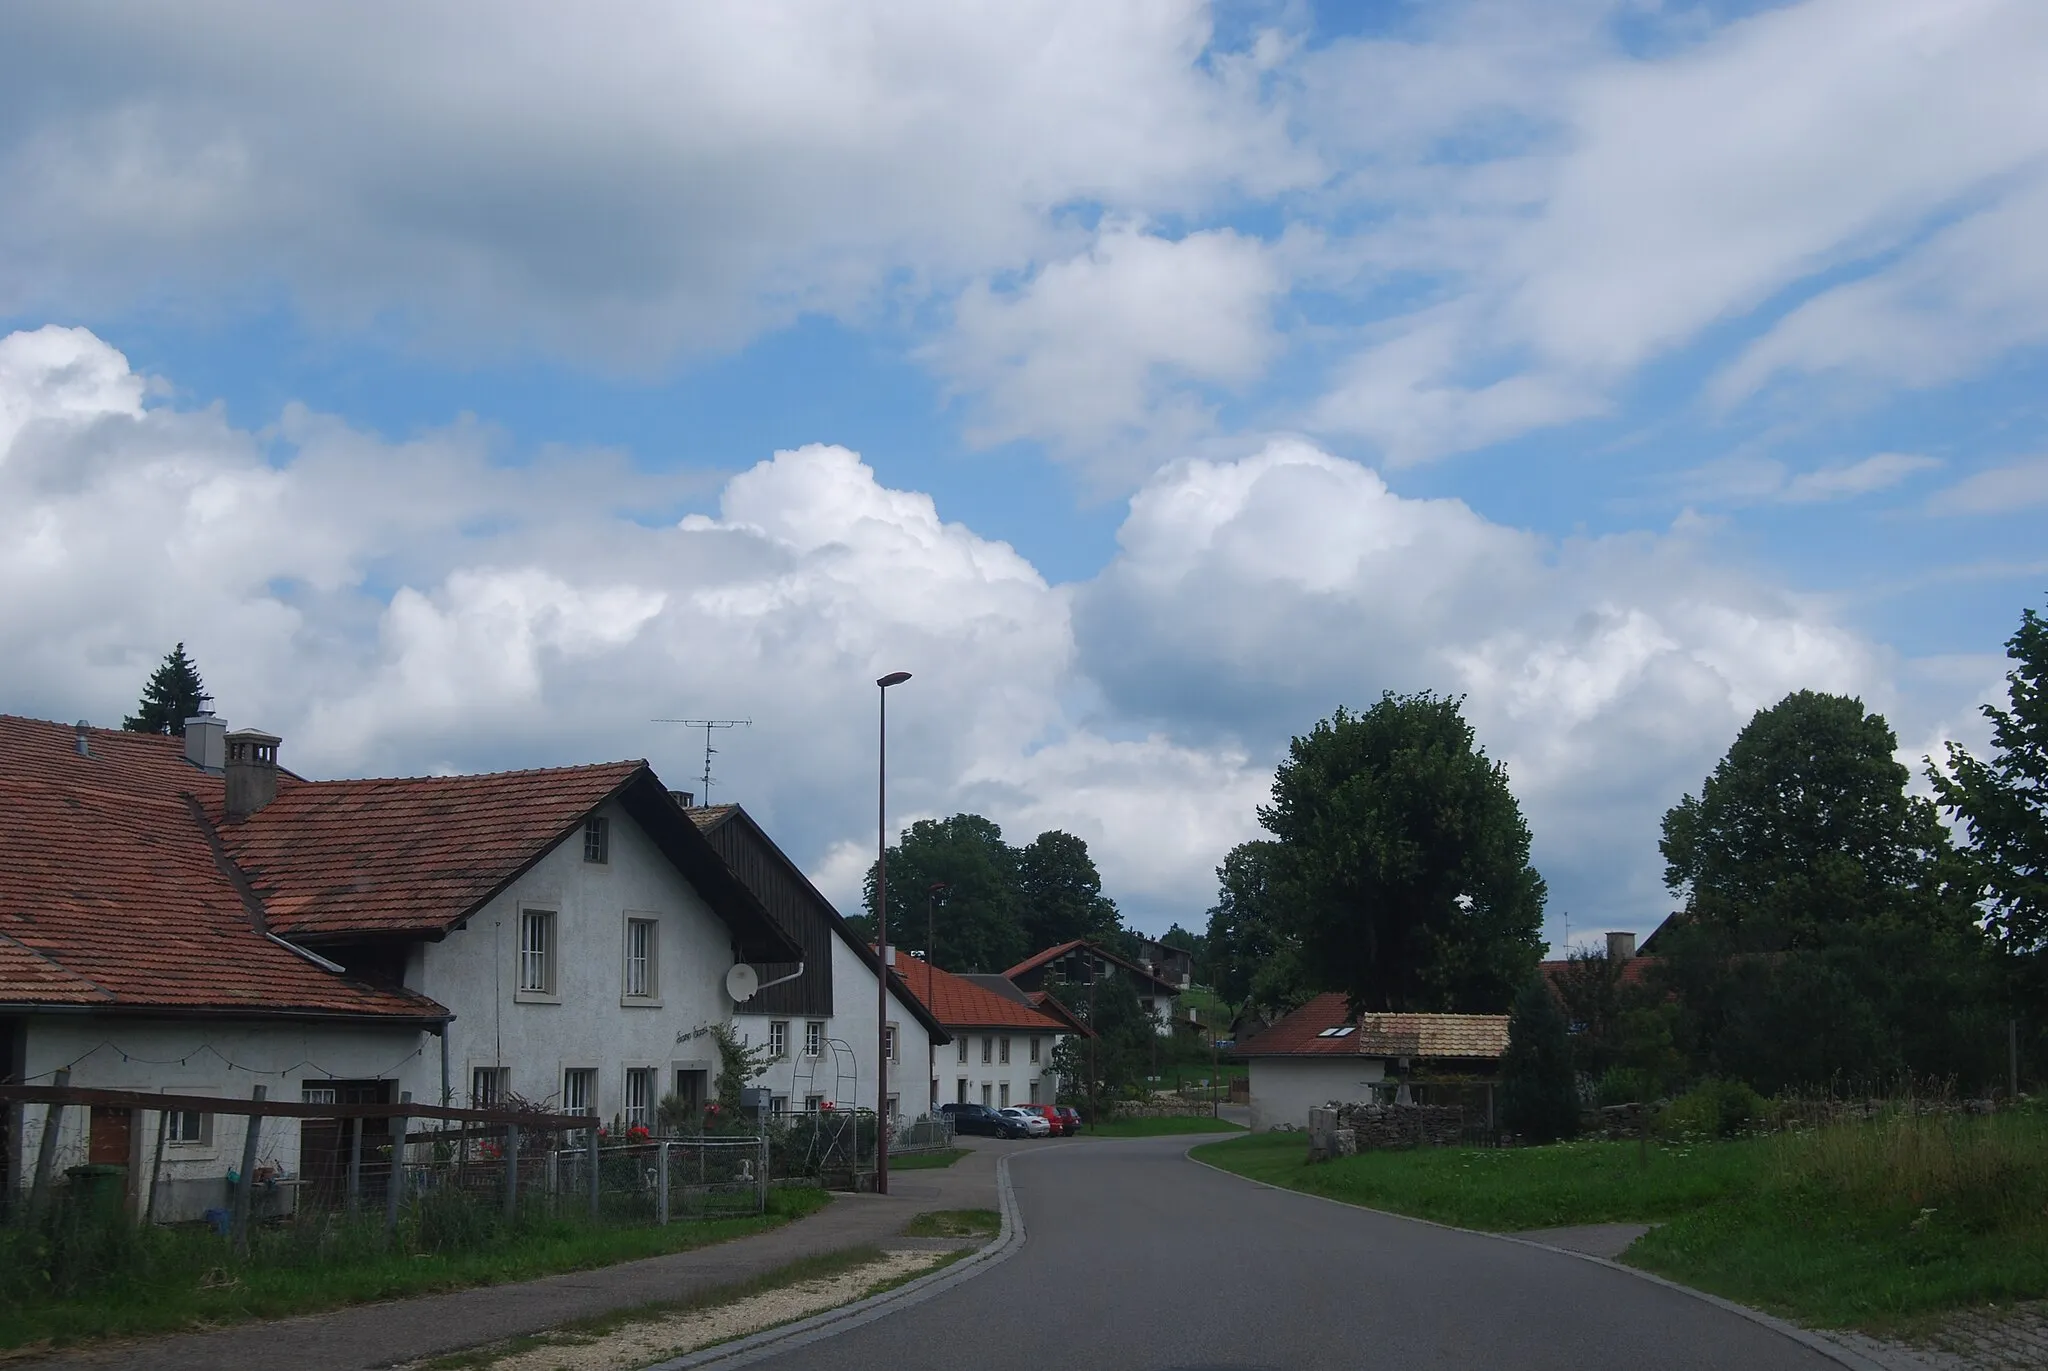 Photo showing: Lajoux, canton of Jura, Switzerland